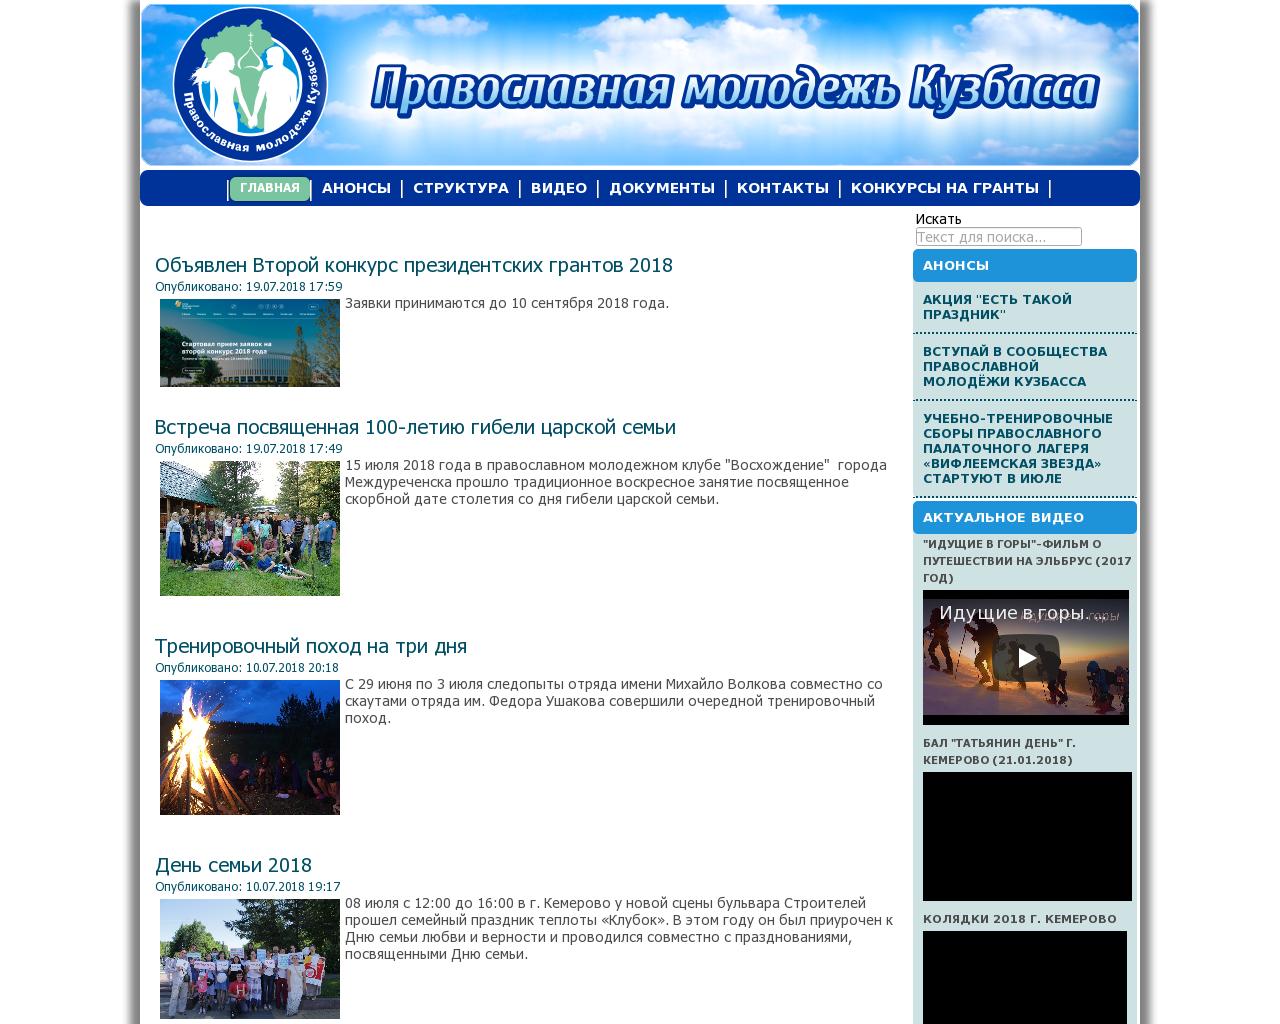 Изображение сайта molodsib.ru в разрешении 1280x1024